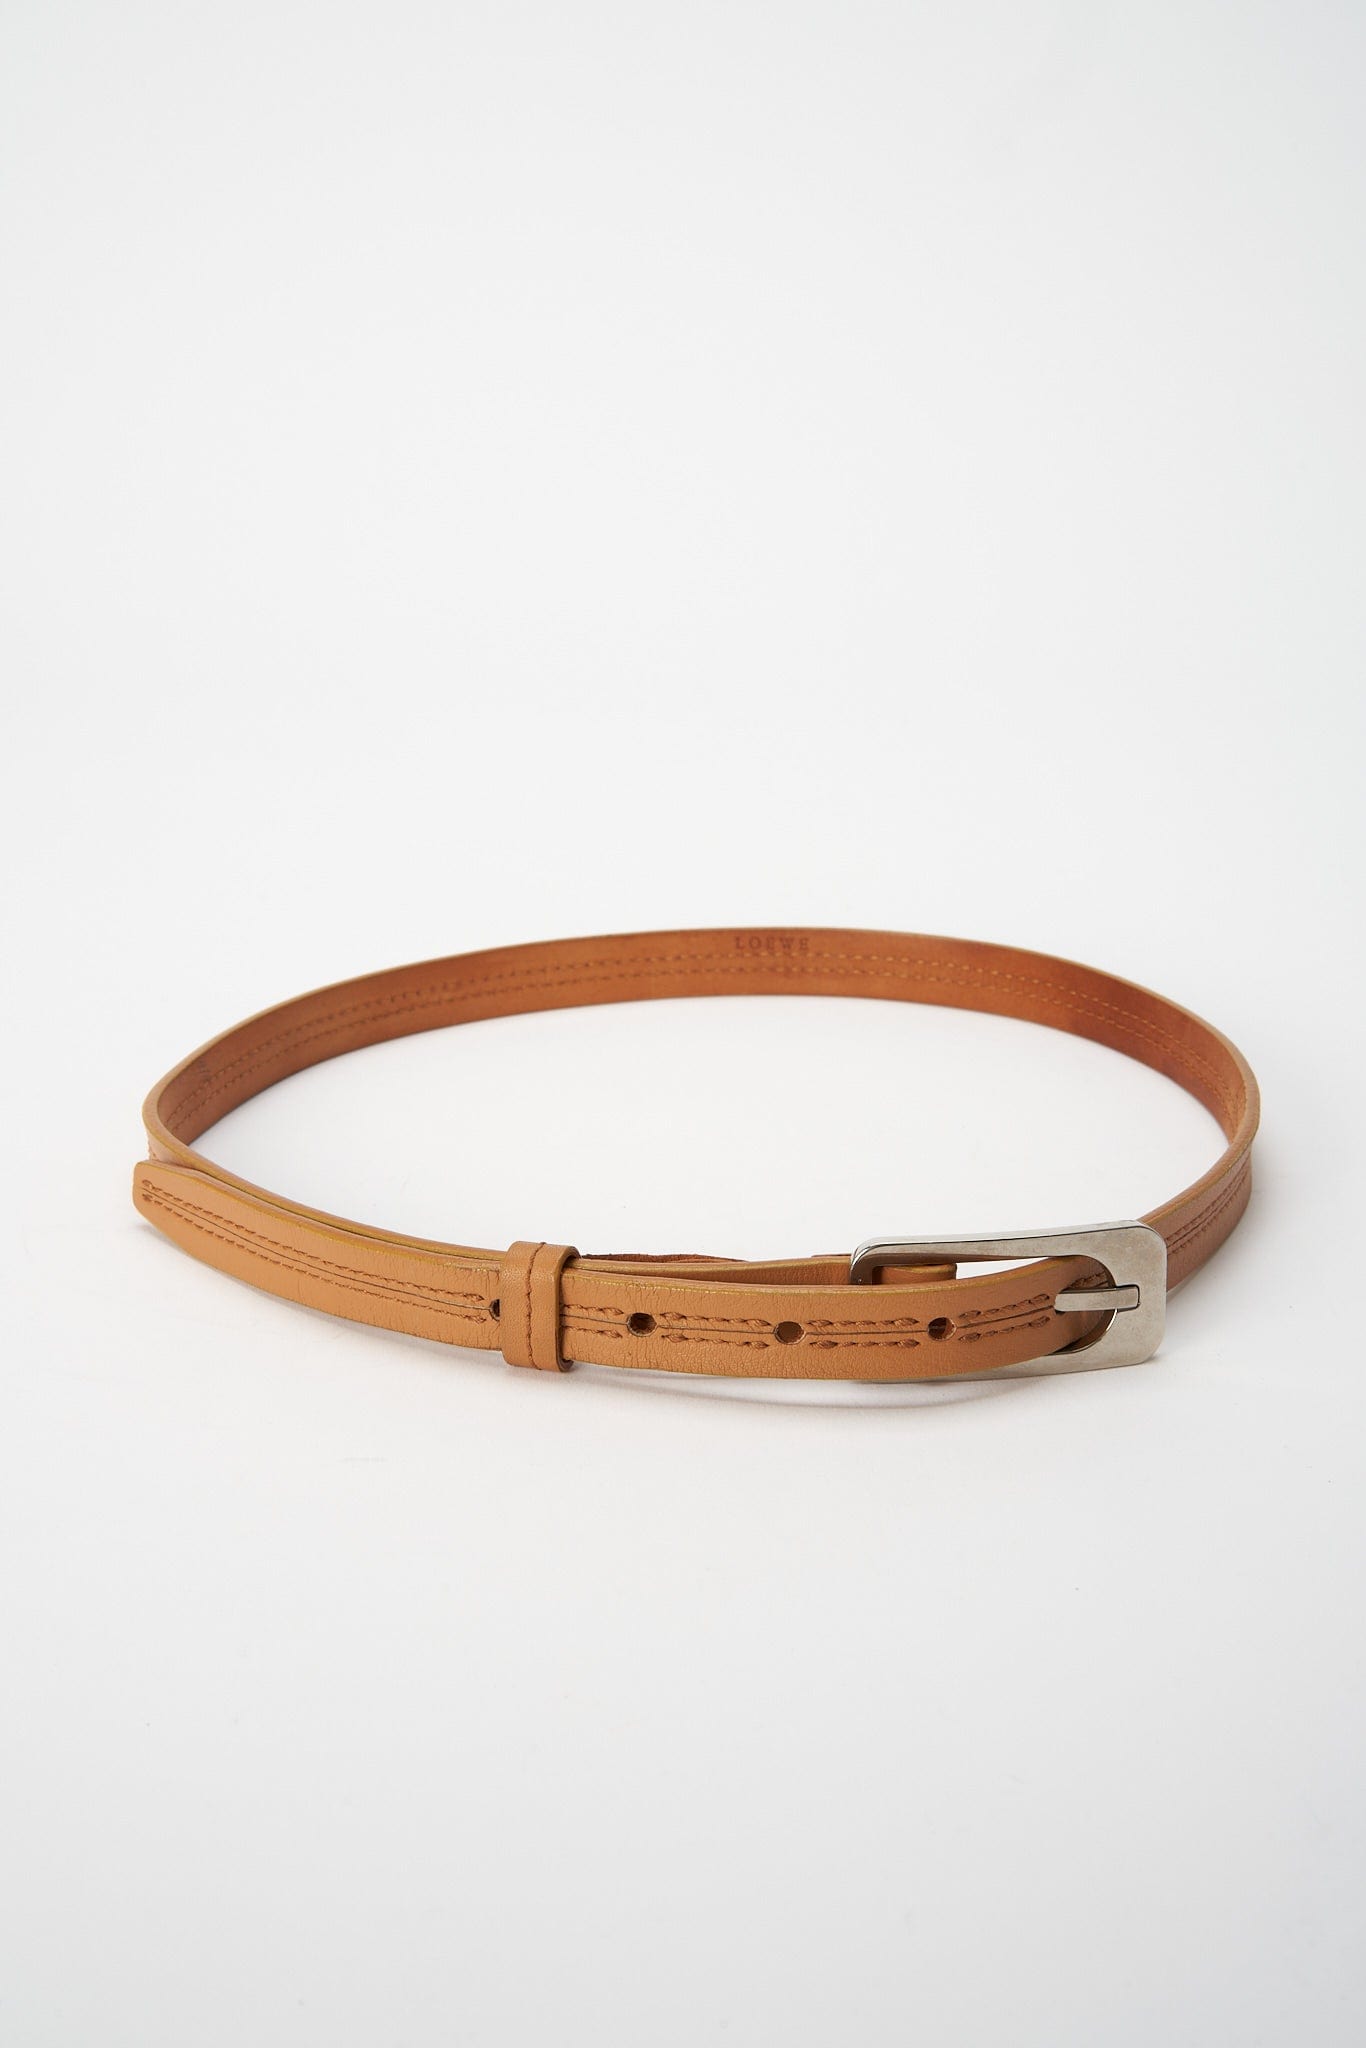 Vintage Loewe Belt